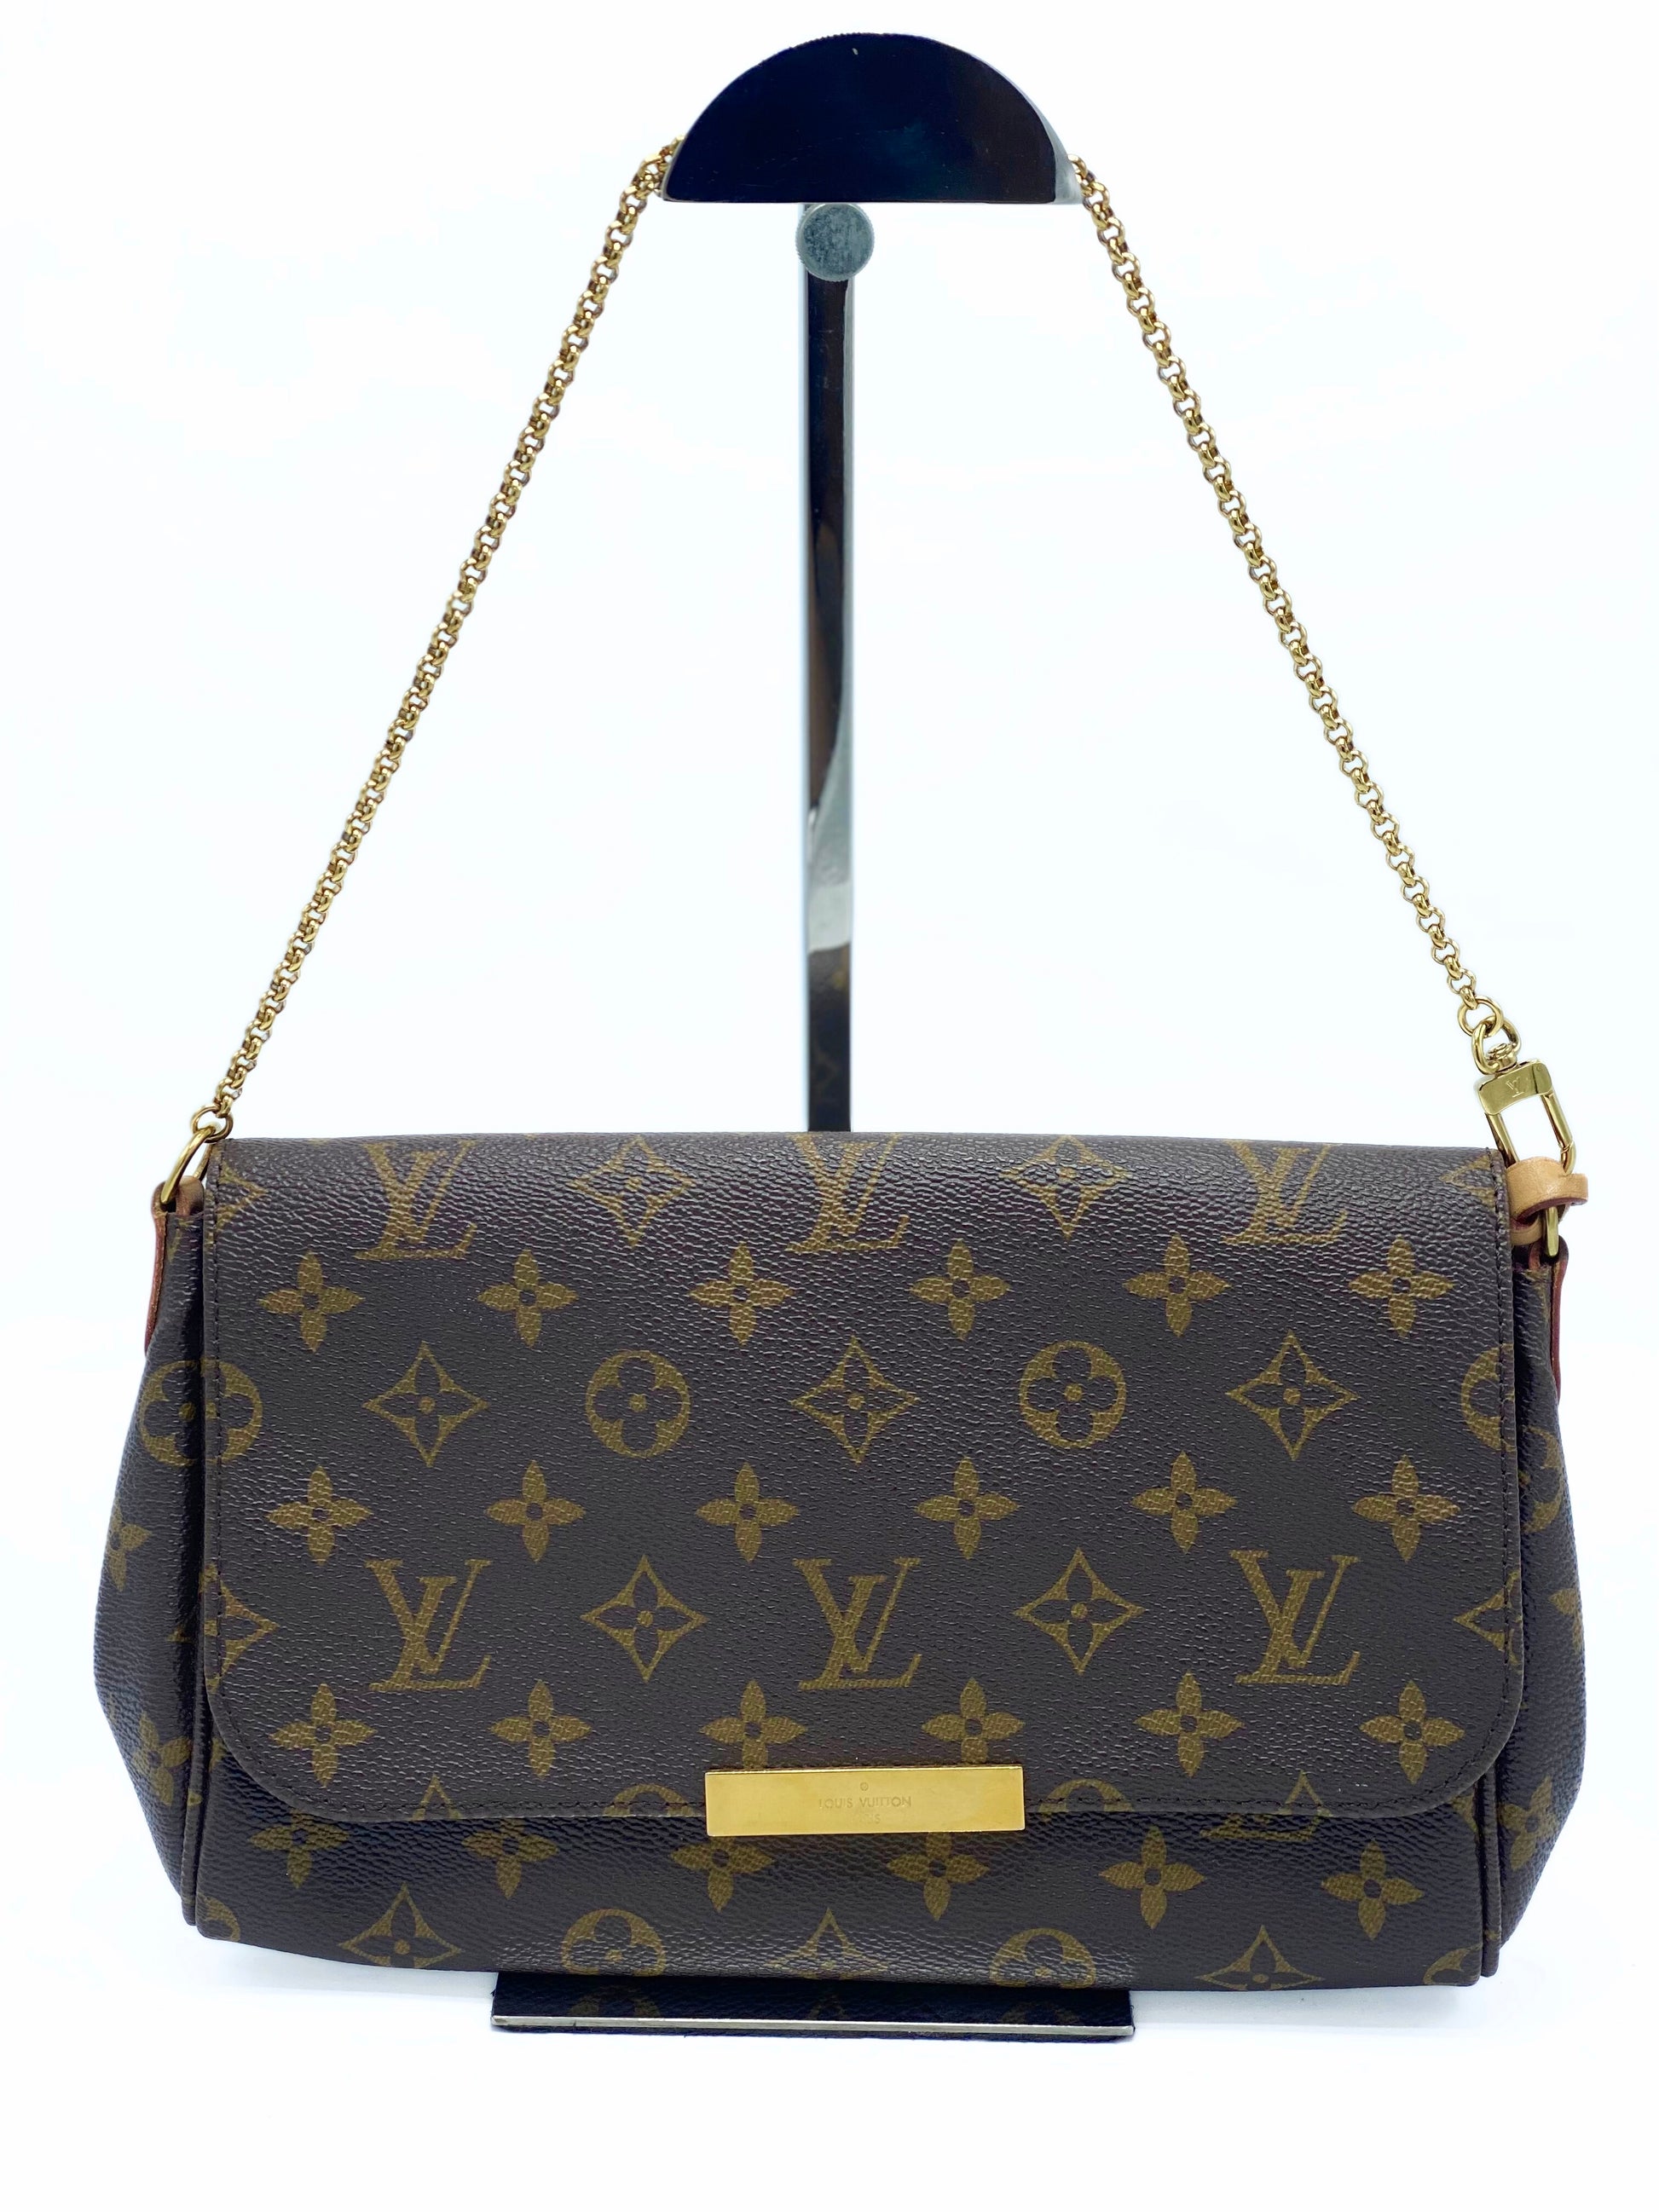 Louis Vuitton, Bags, Favoritecrossbody Louis Vuitton